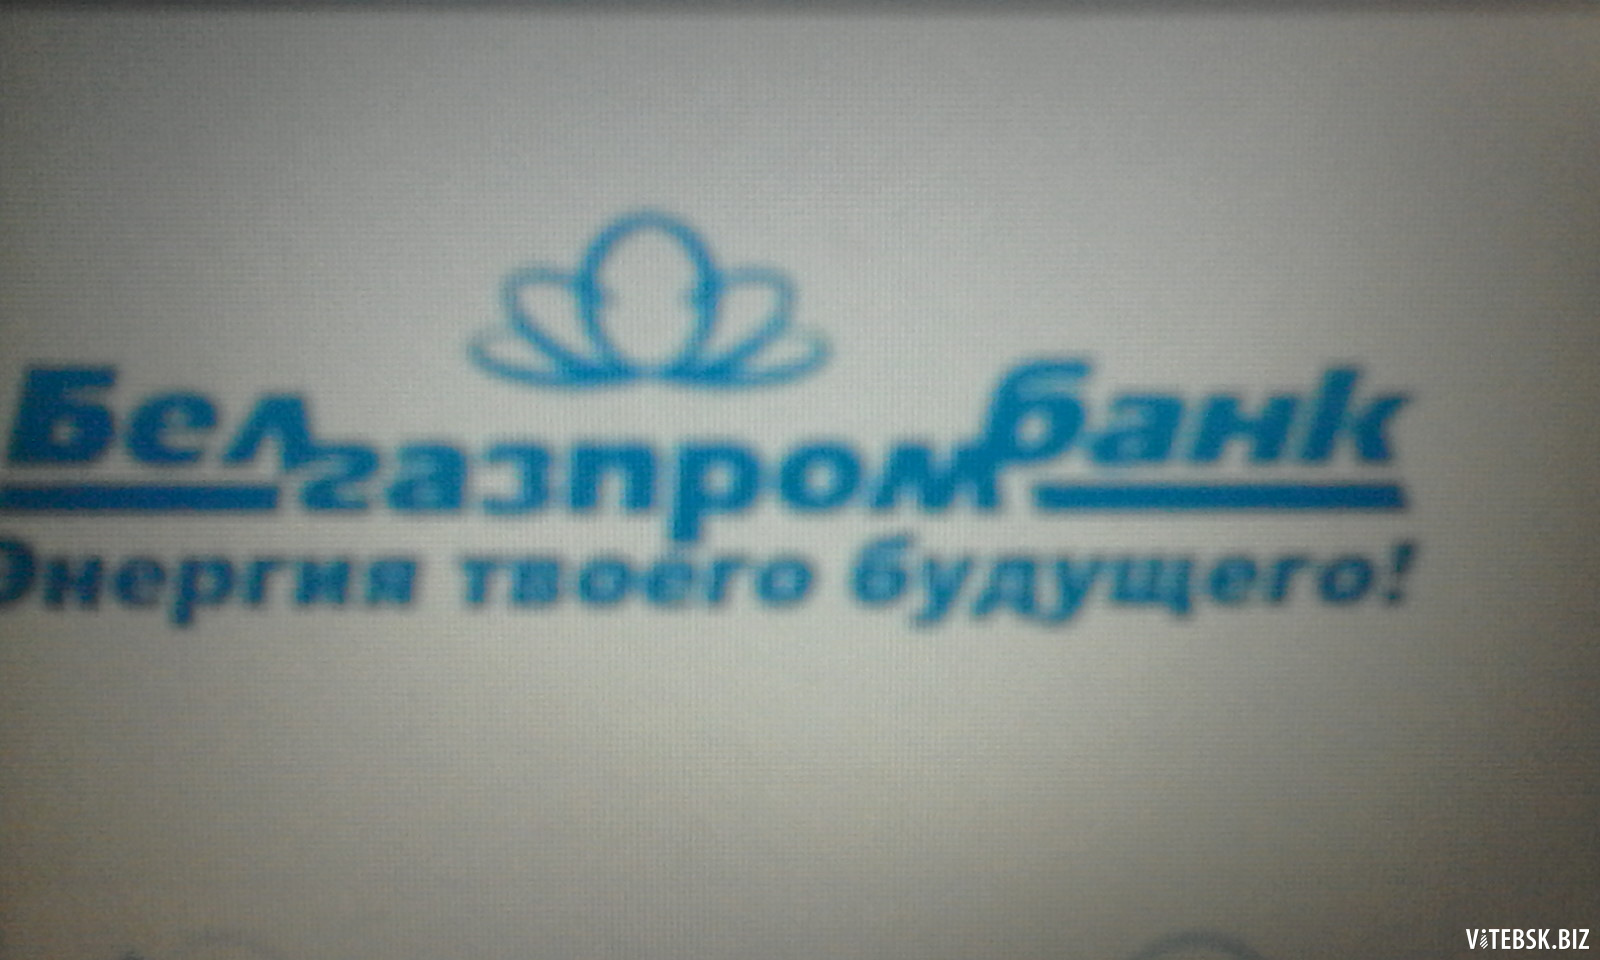 Банк партнер белгазпромбанка. Белгазпромбанк логотип. Карта Белгазпромбанка. Белгазпромбанк печать. Белгазпромбанк синяя печать.